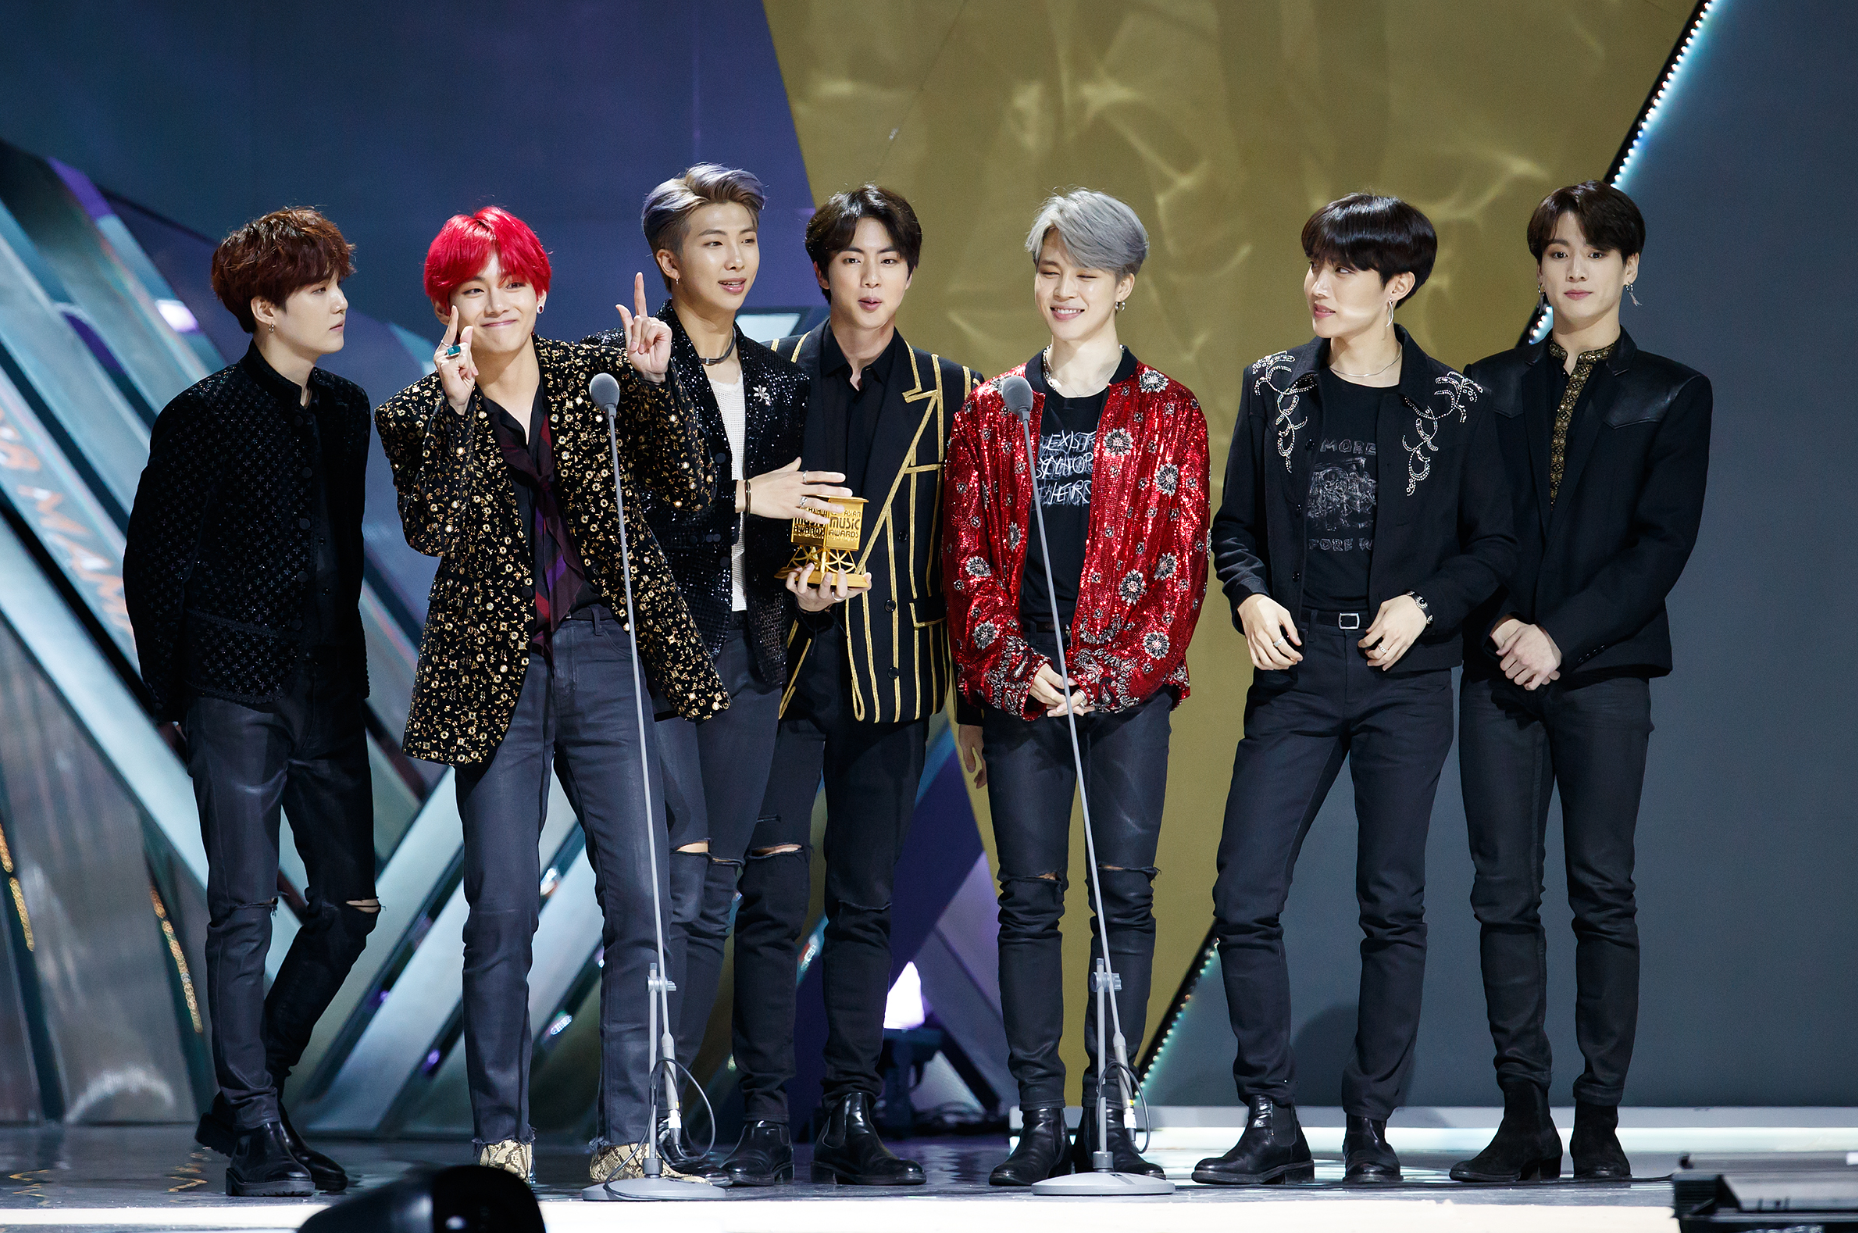 BTS sweep up at Mama 2018 in Hong Kong: K-pop group win Artist of the Year